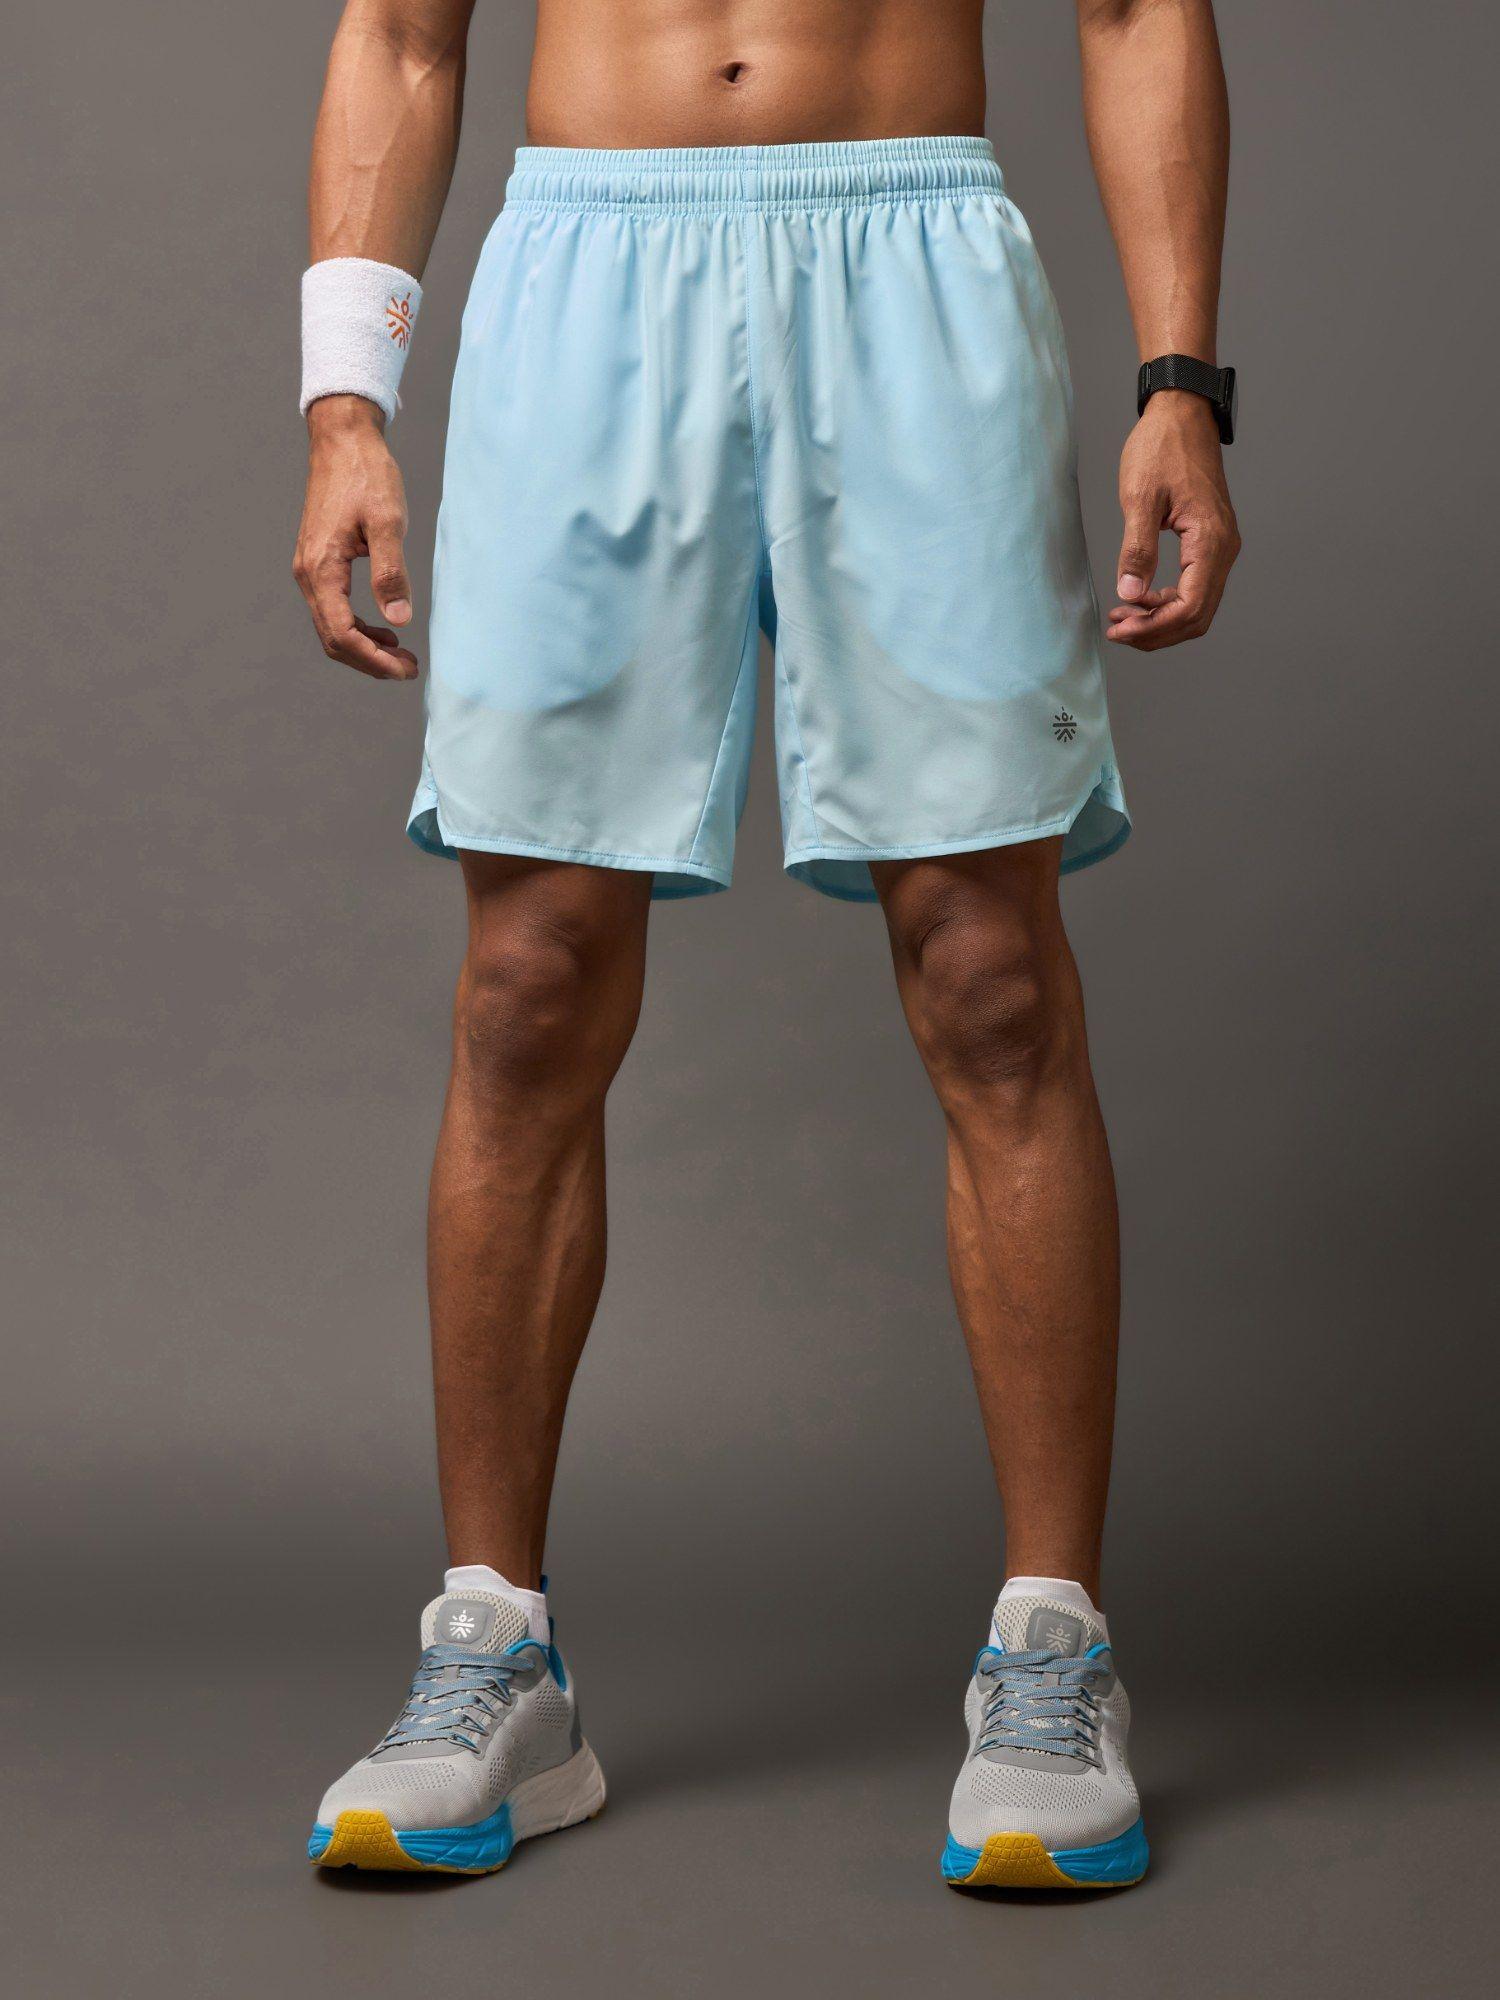 mens iconic blue running shorts